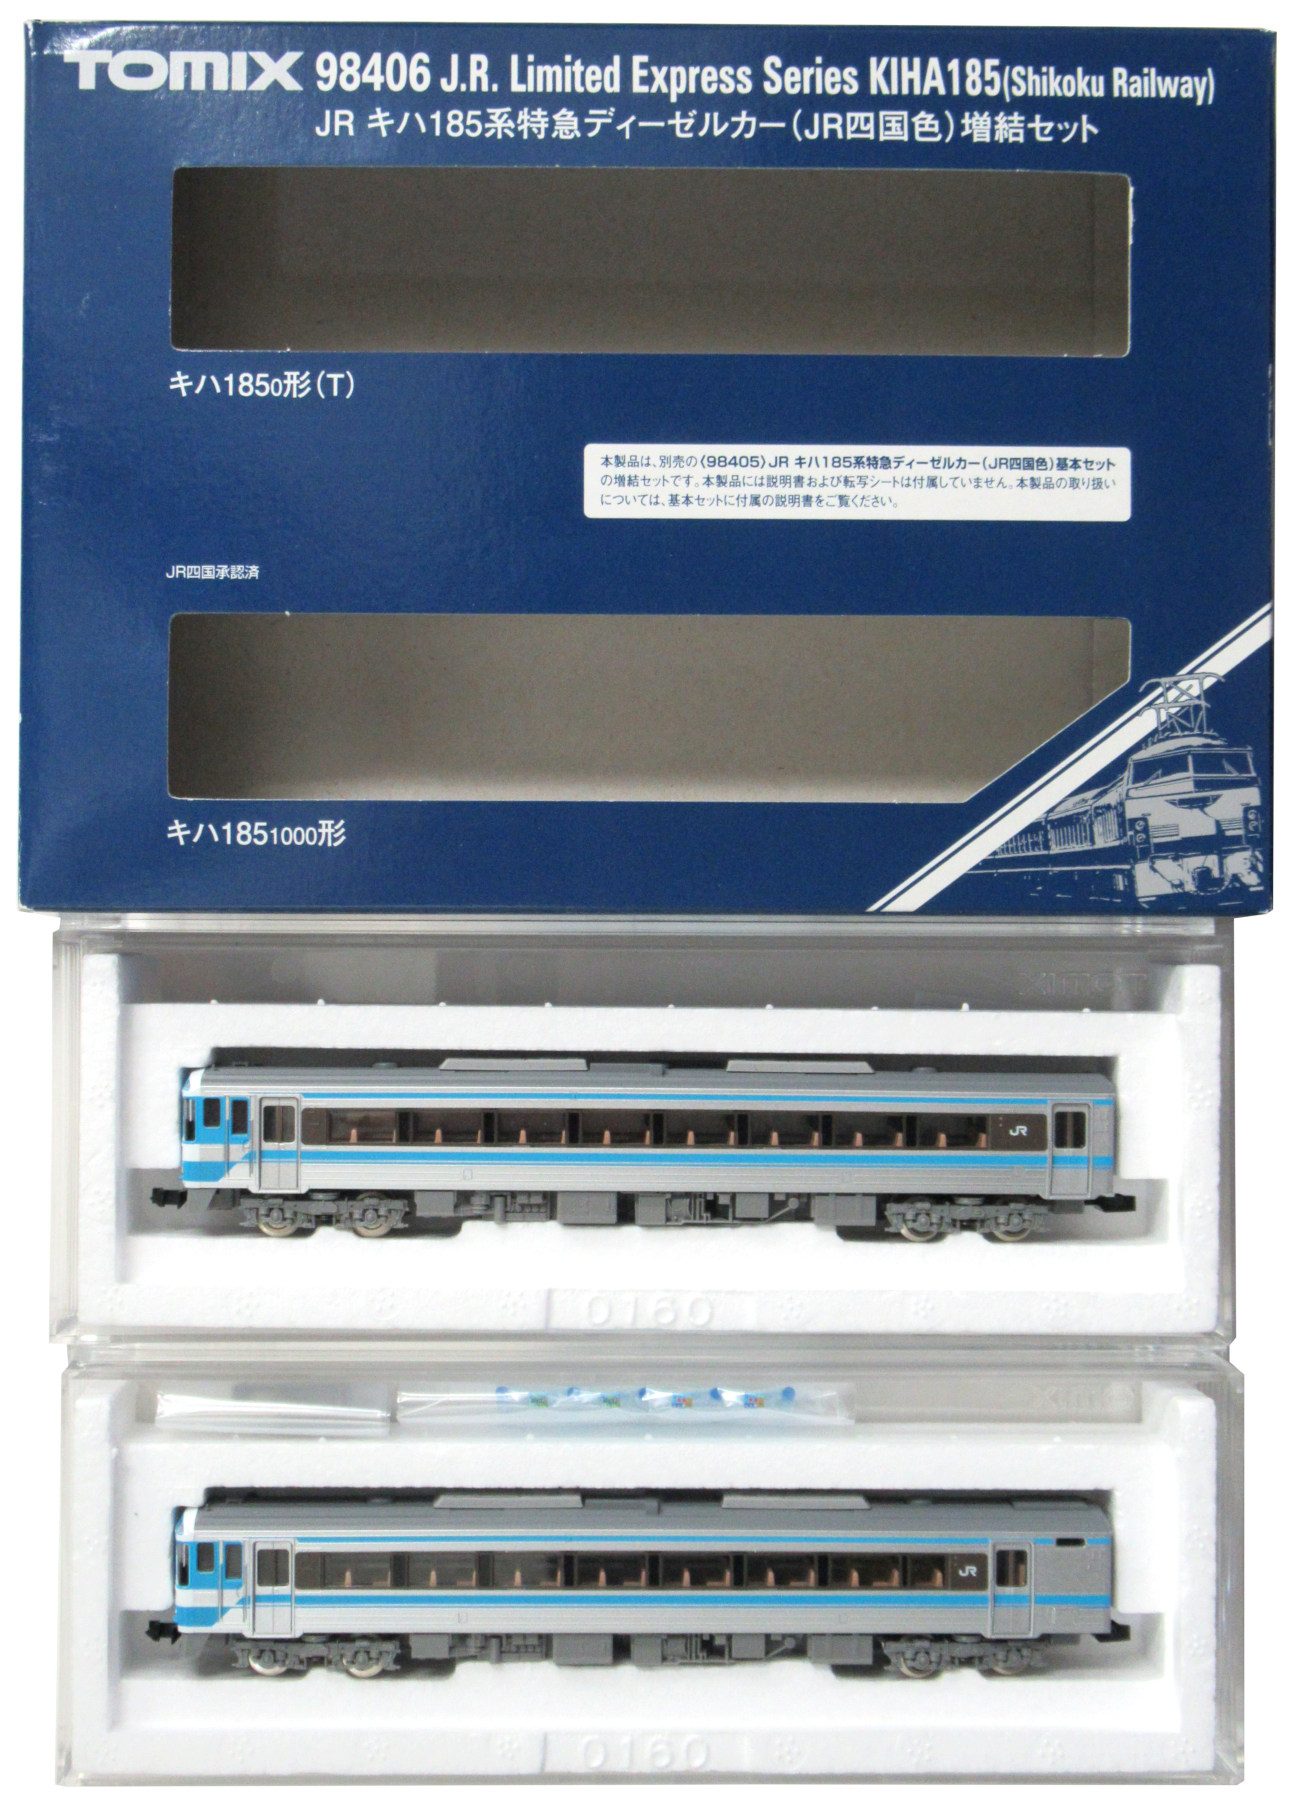 TOMIX JR キハ185系特急ディーゼルカー(JR四国色)基本セット - 鉄道模型